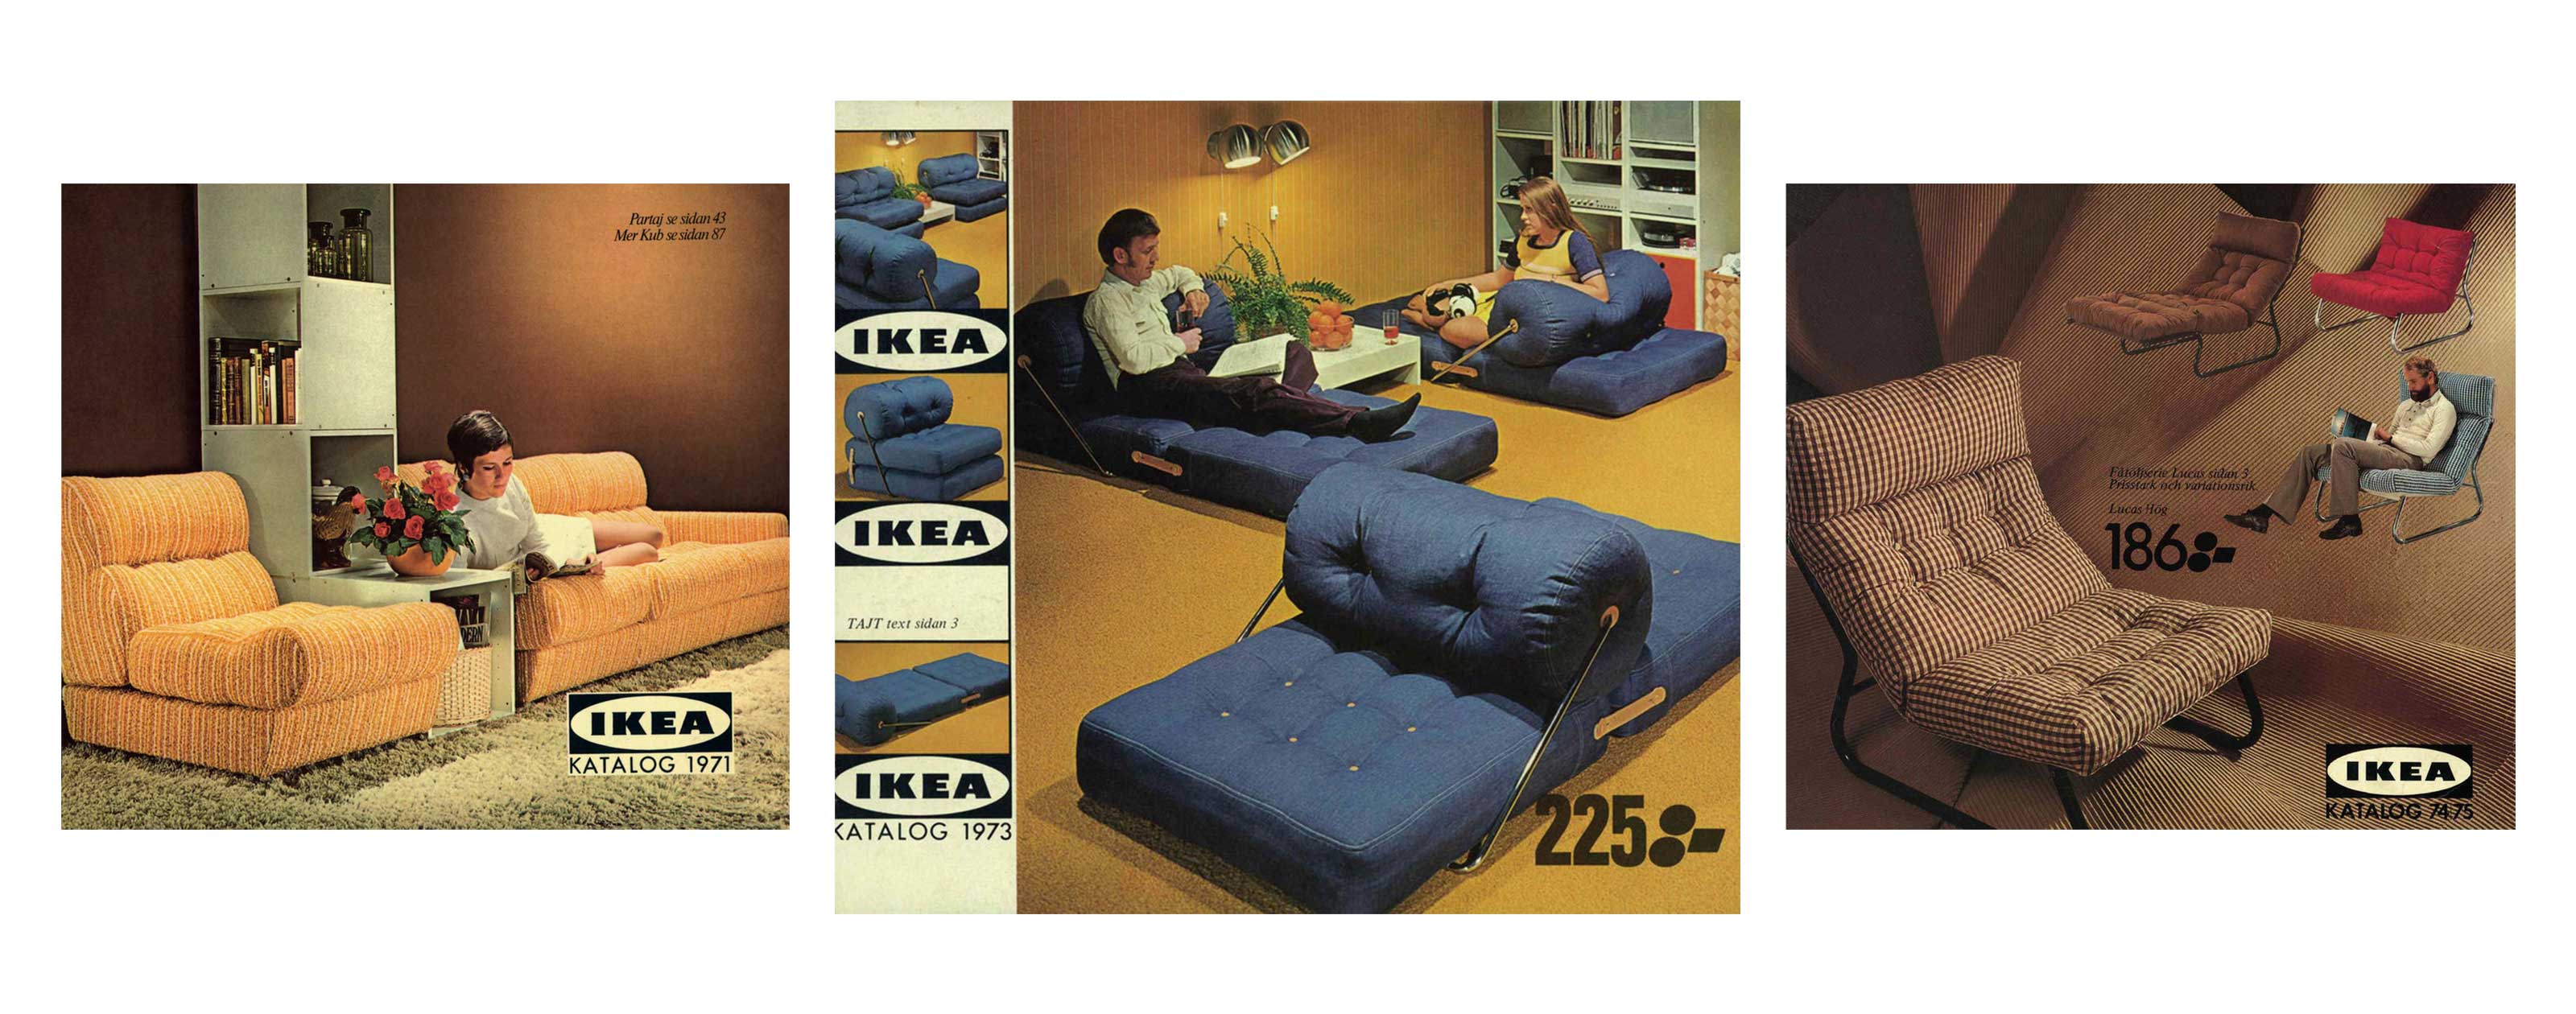 IKEA-slide 3